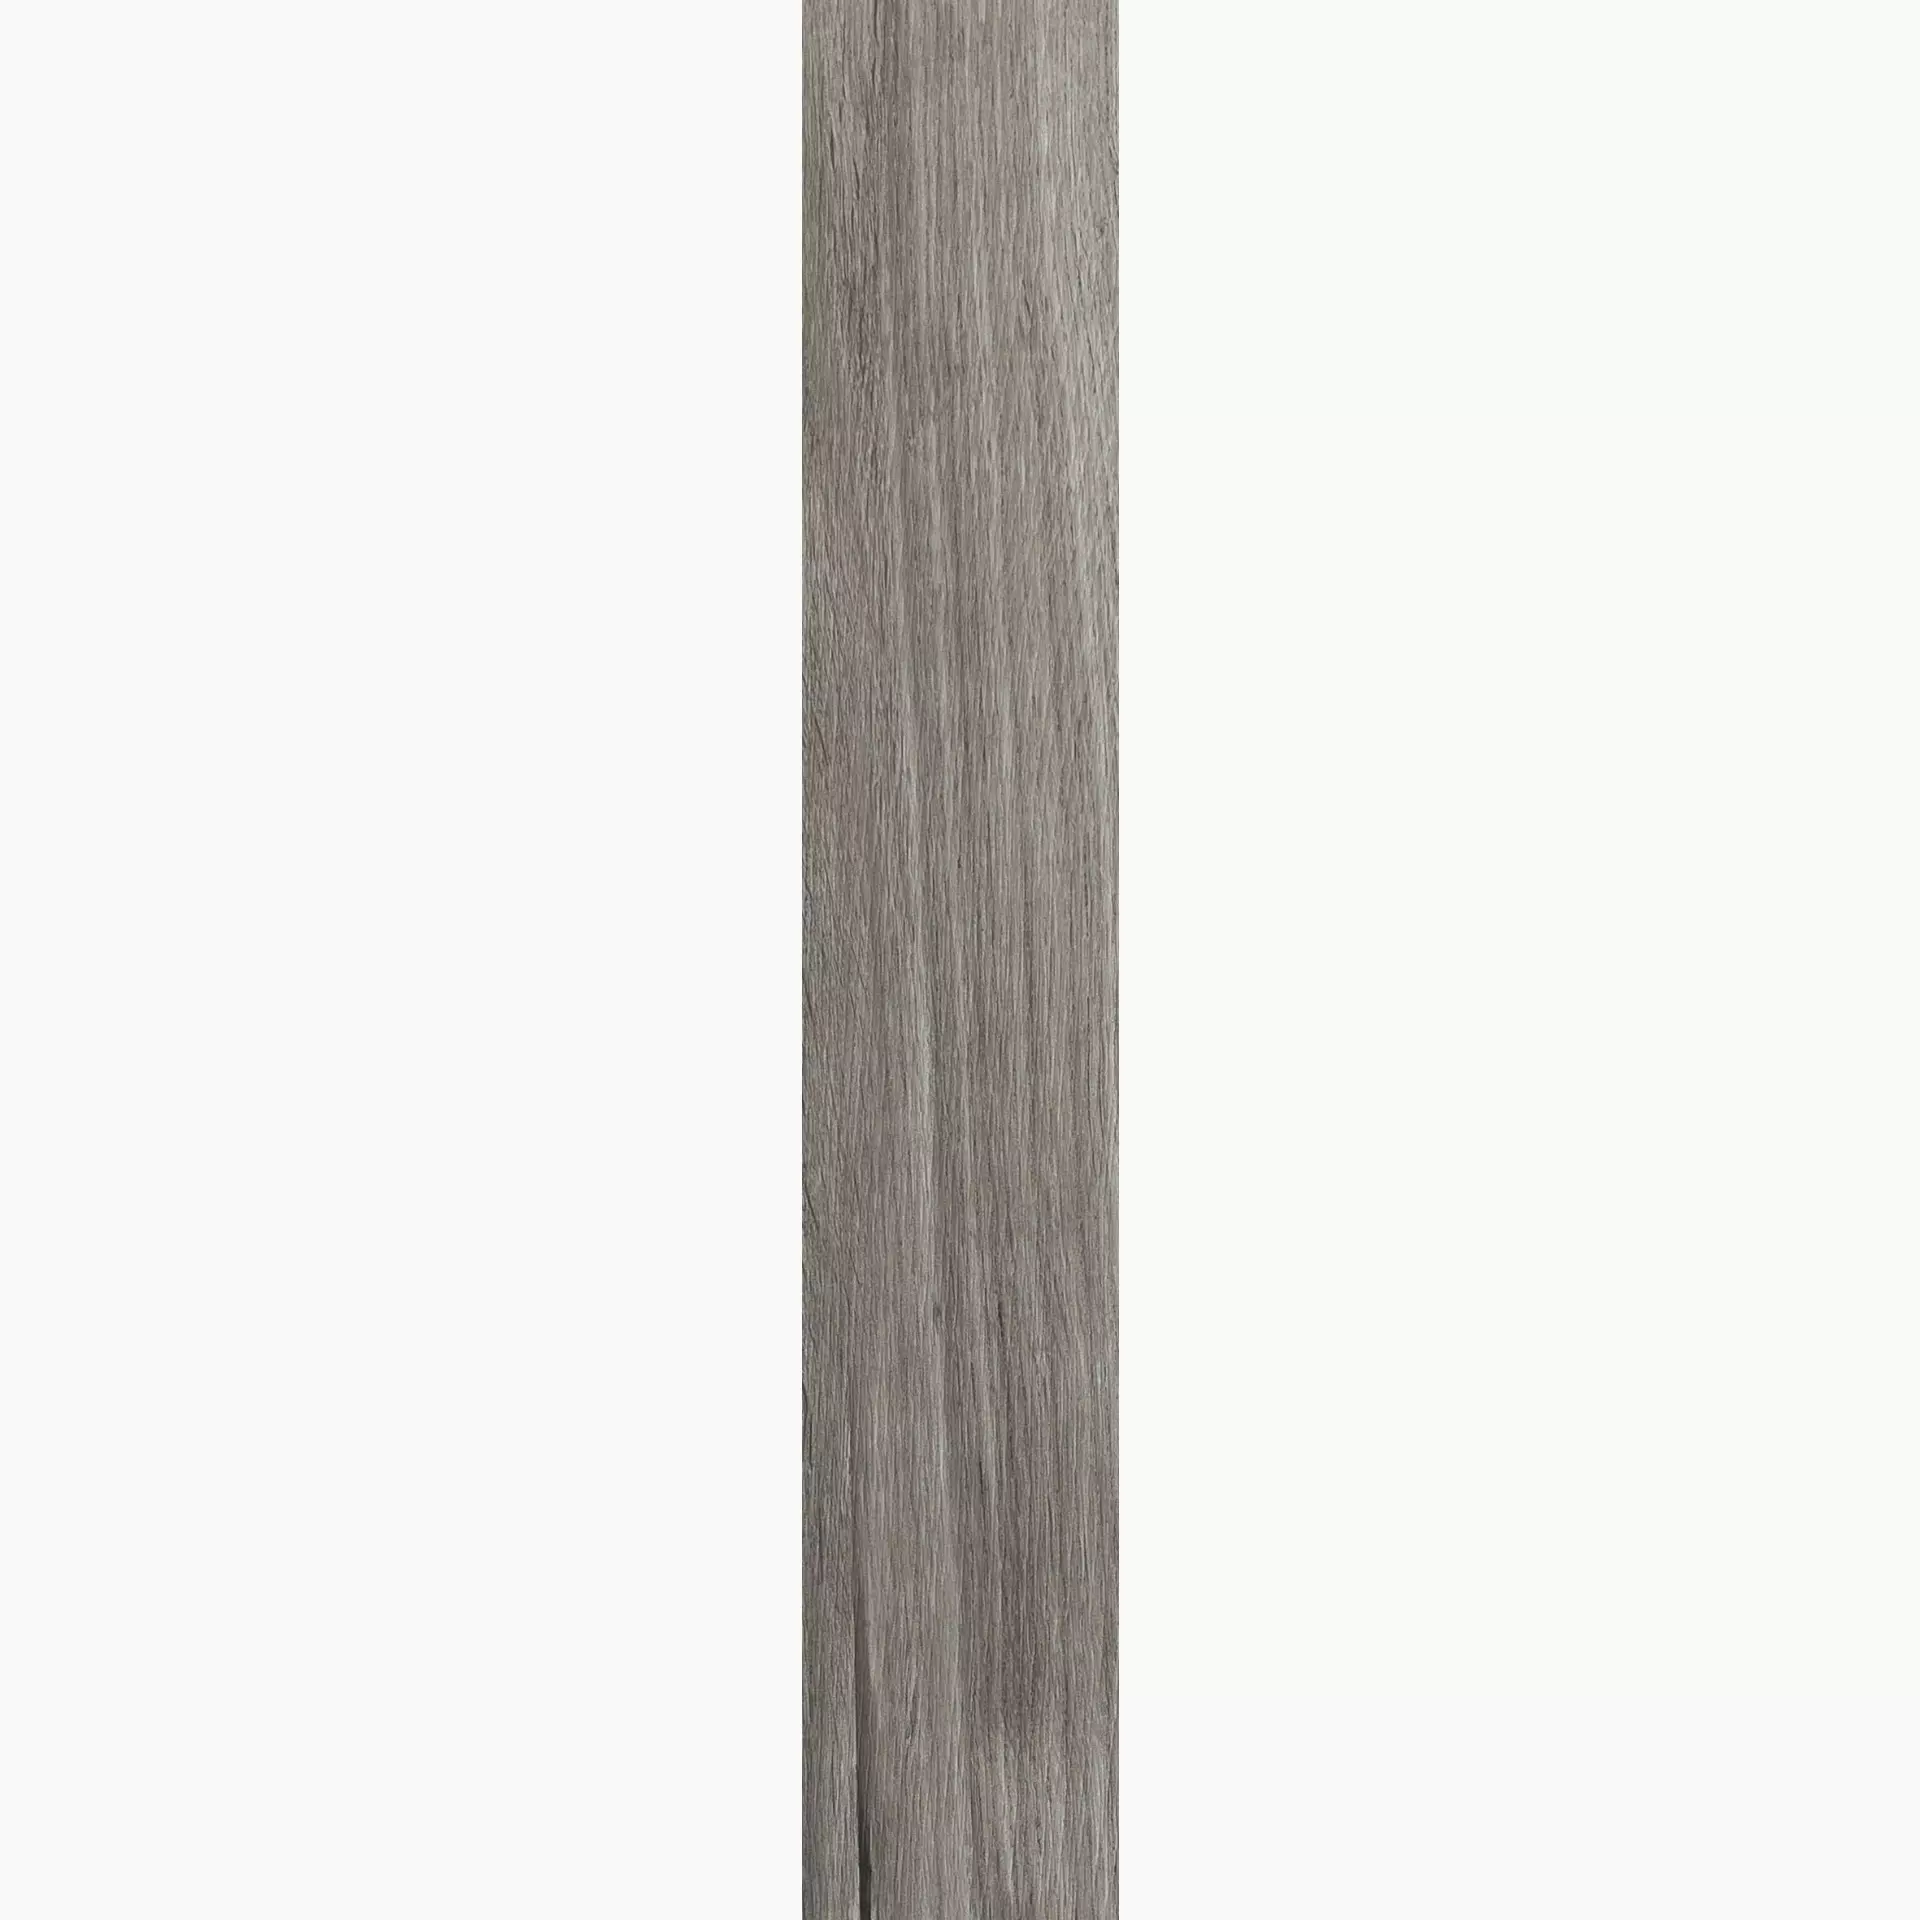 Florim Planches De Rex Perle Naturale – Matt 755610 20x120cm rectified 9mm